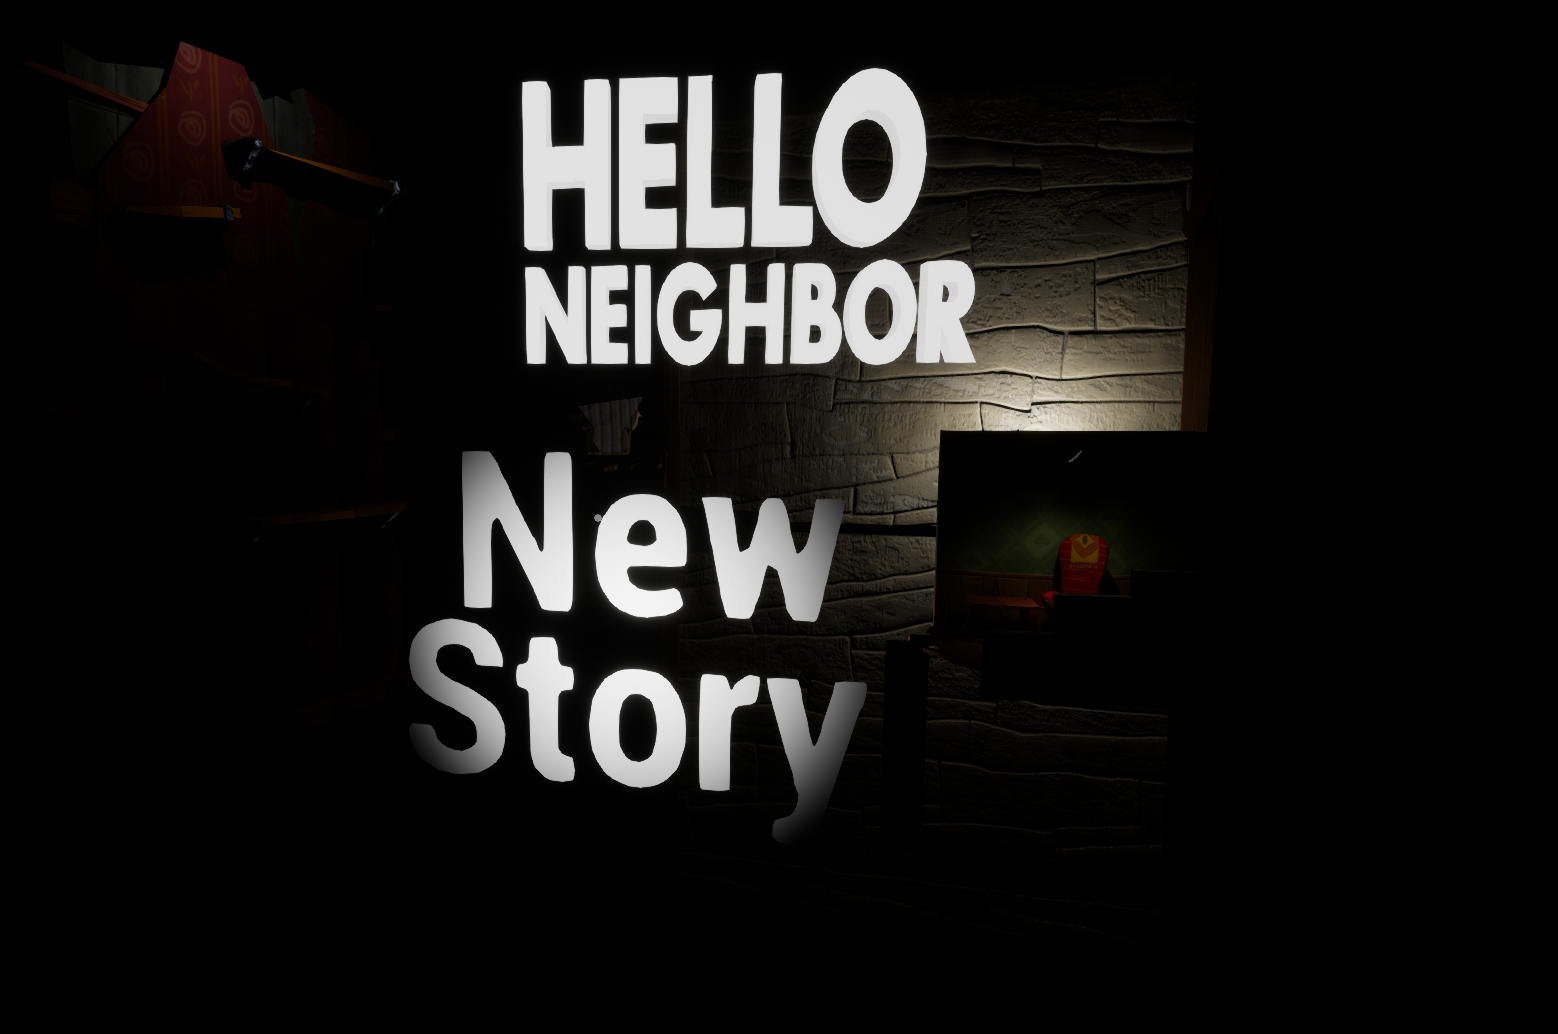 hello neighbor alpha 4 steam